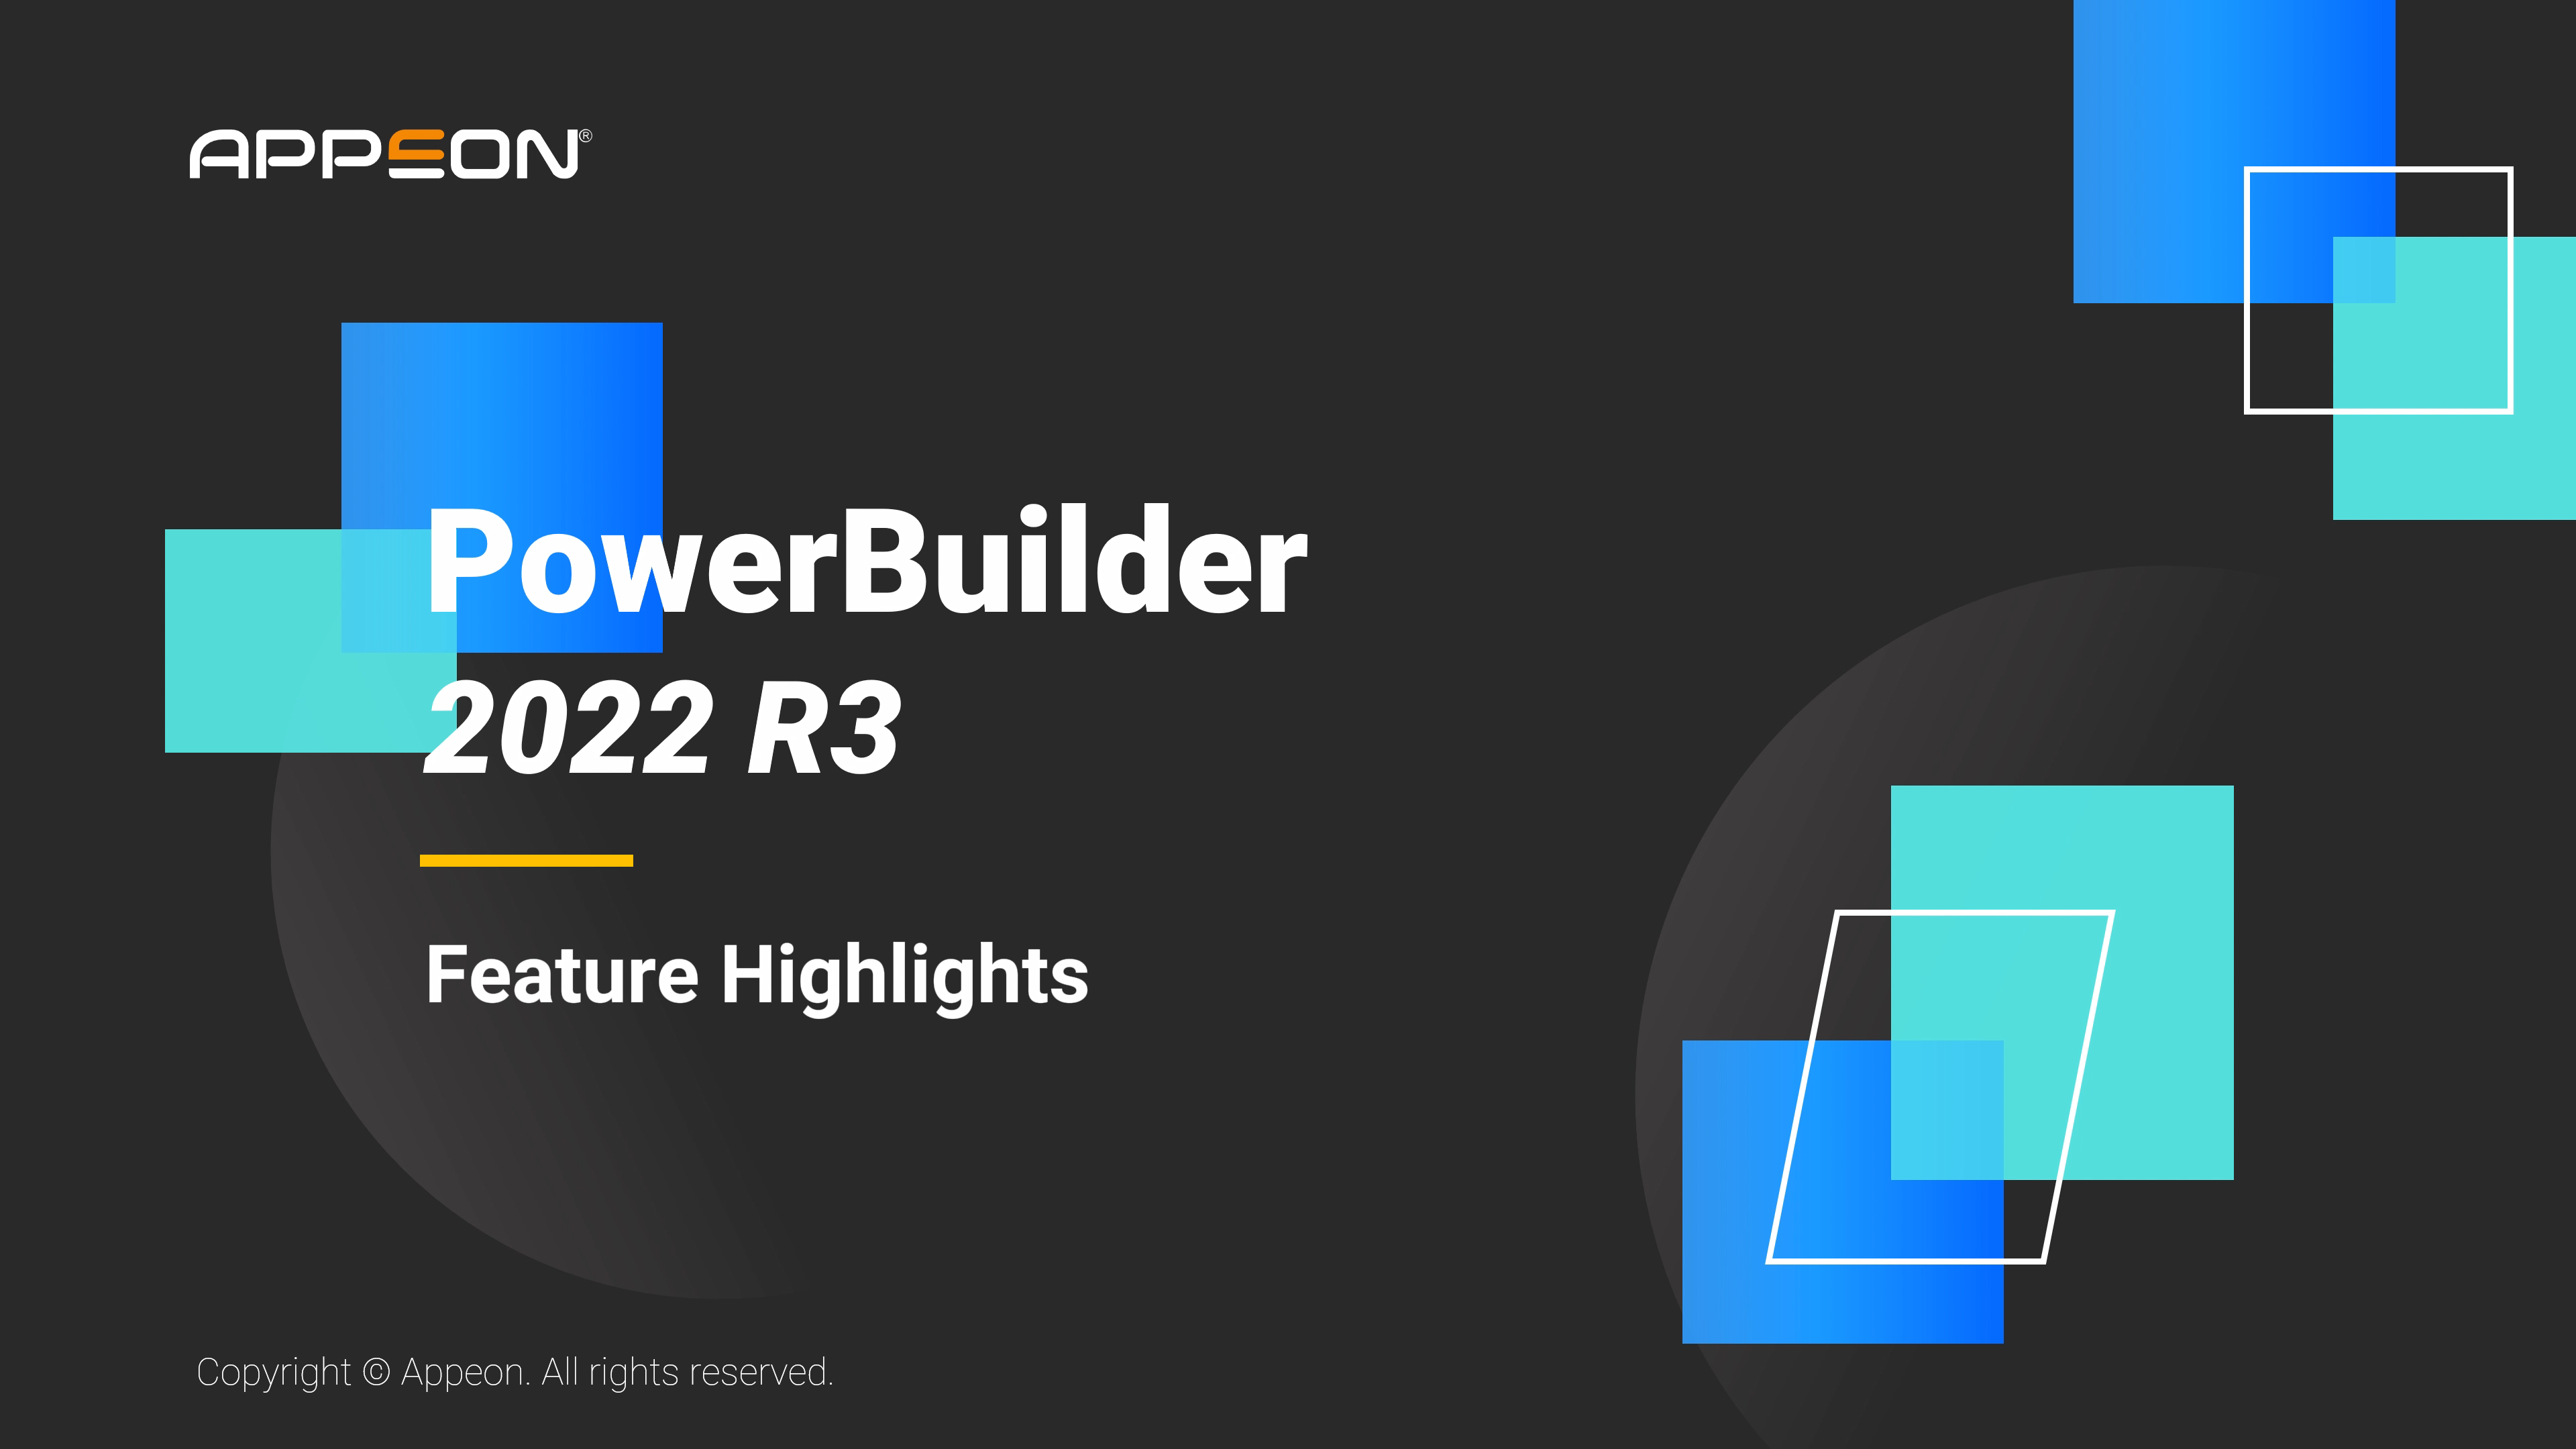 Highlights of PowerBuilder 2022 R3